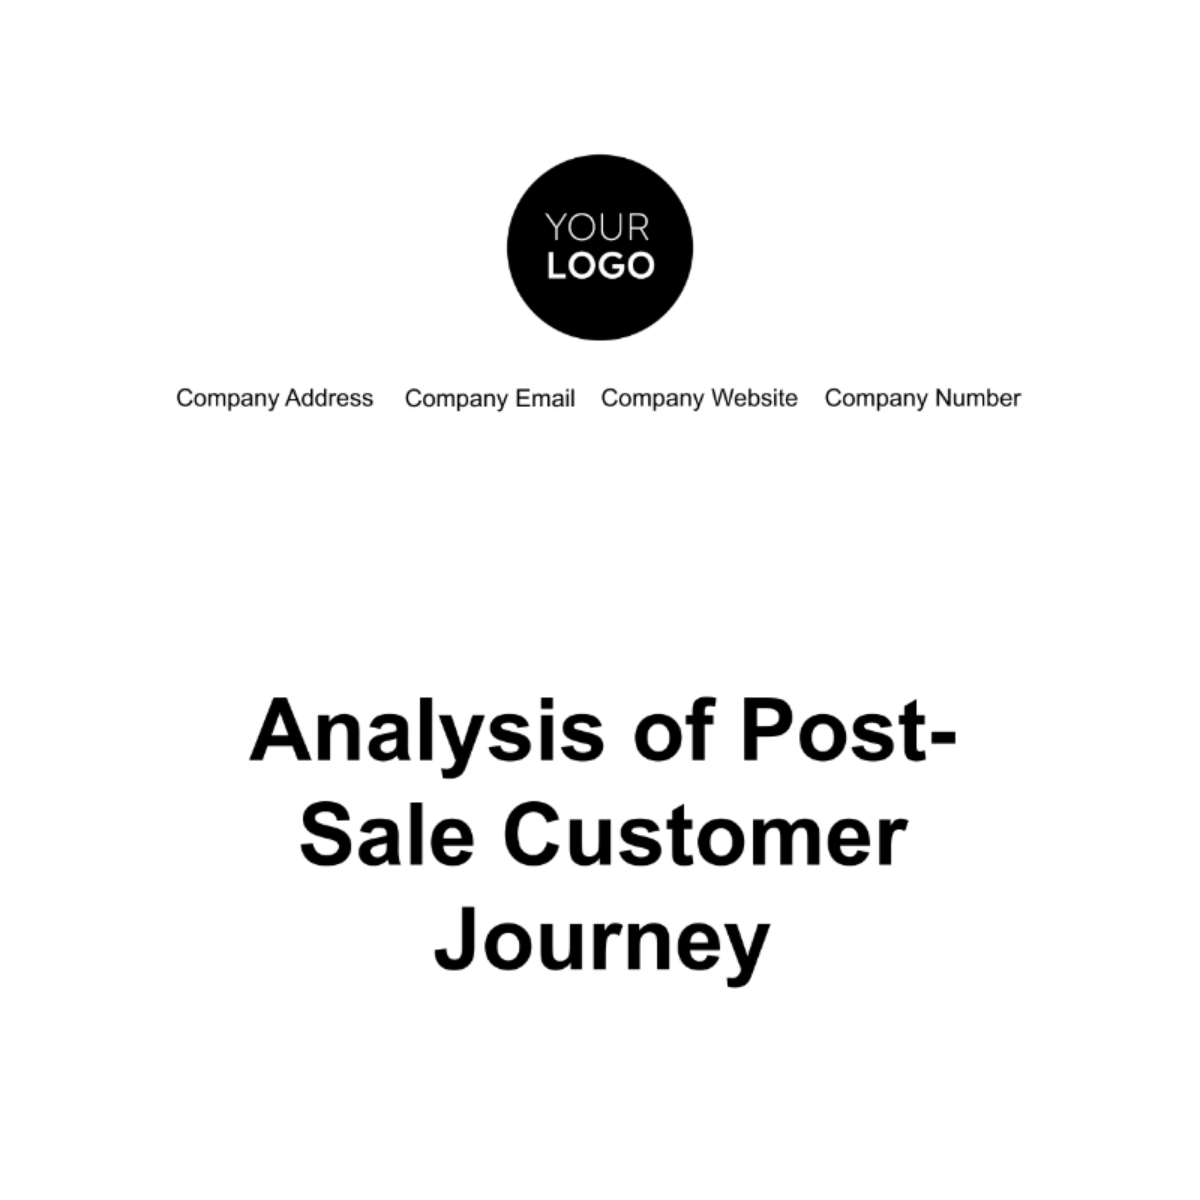 Analysis of Post-Sale Customer Journey Template